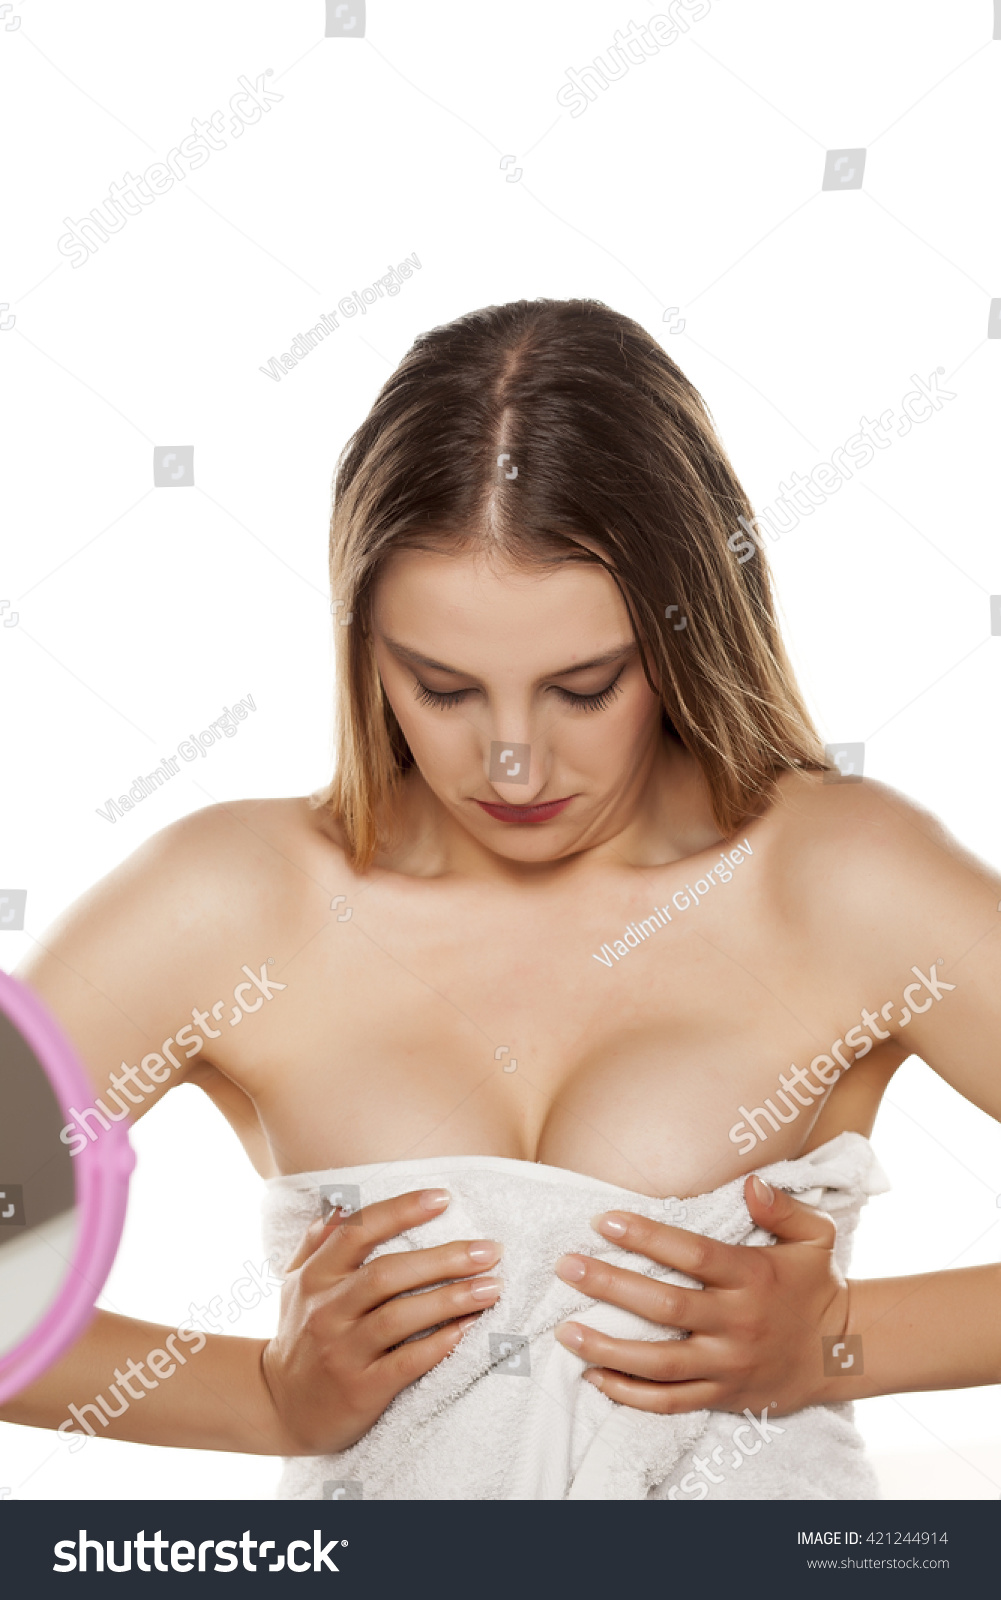 Girls squeezing their boobs